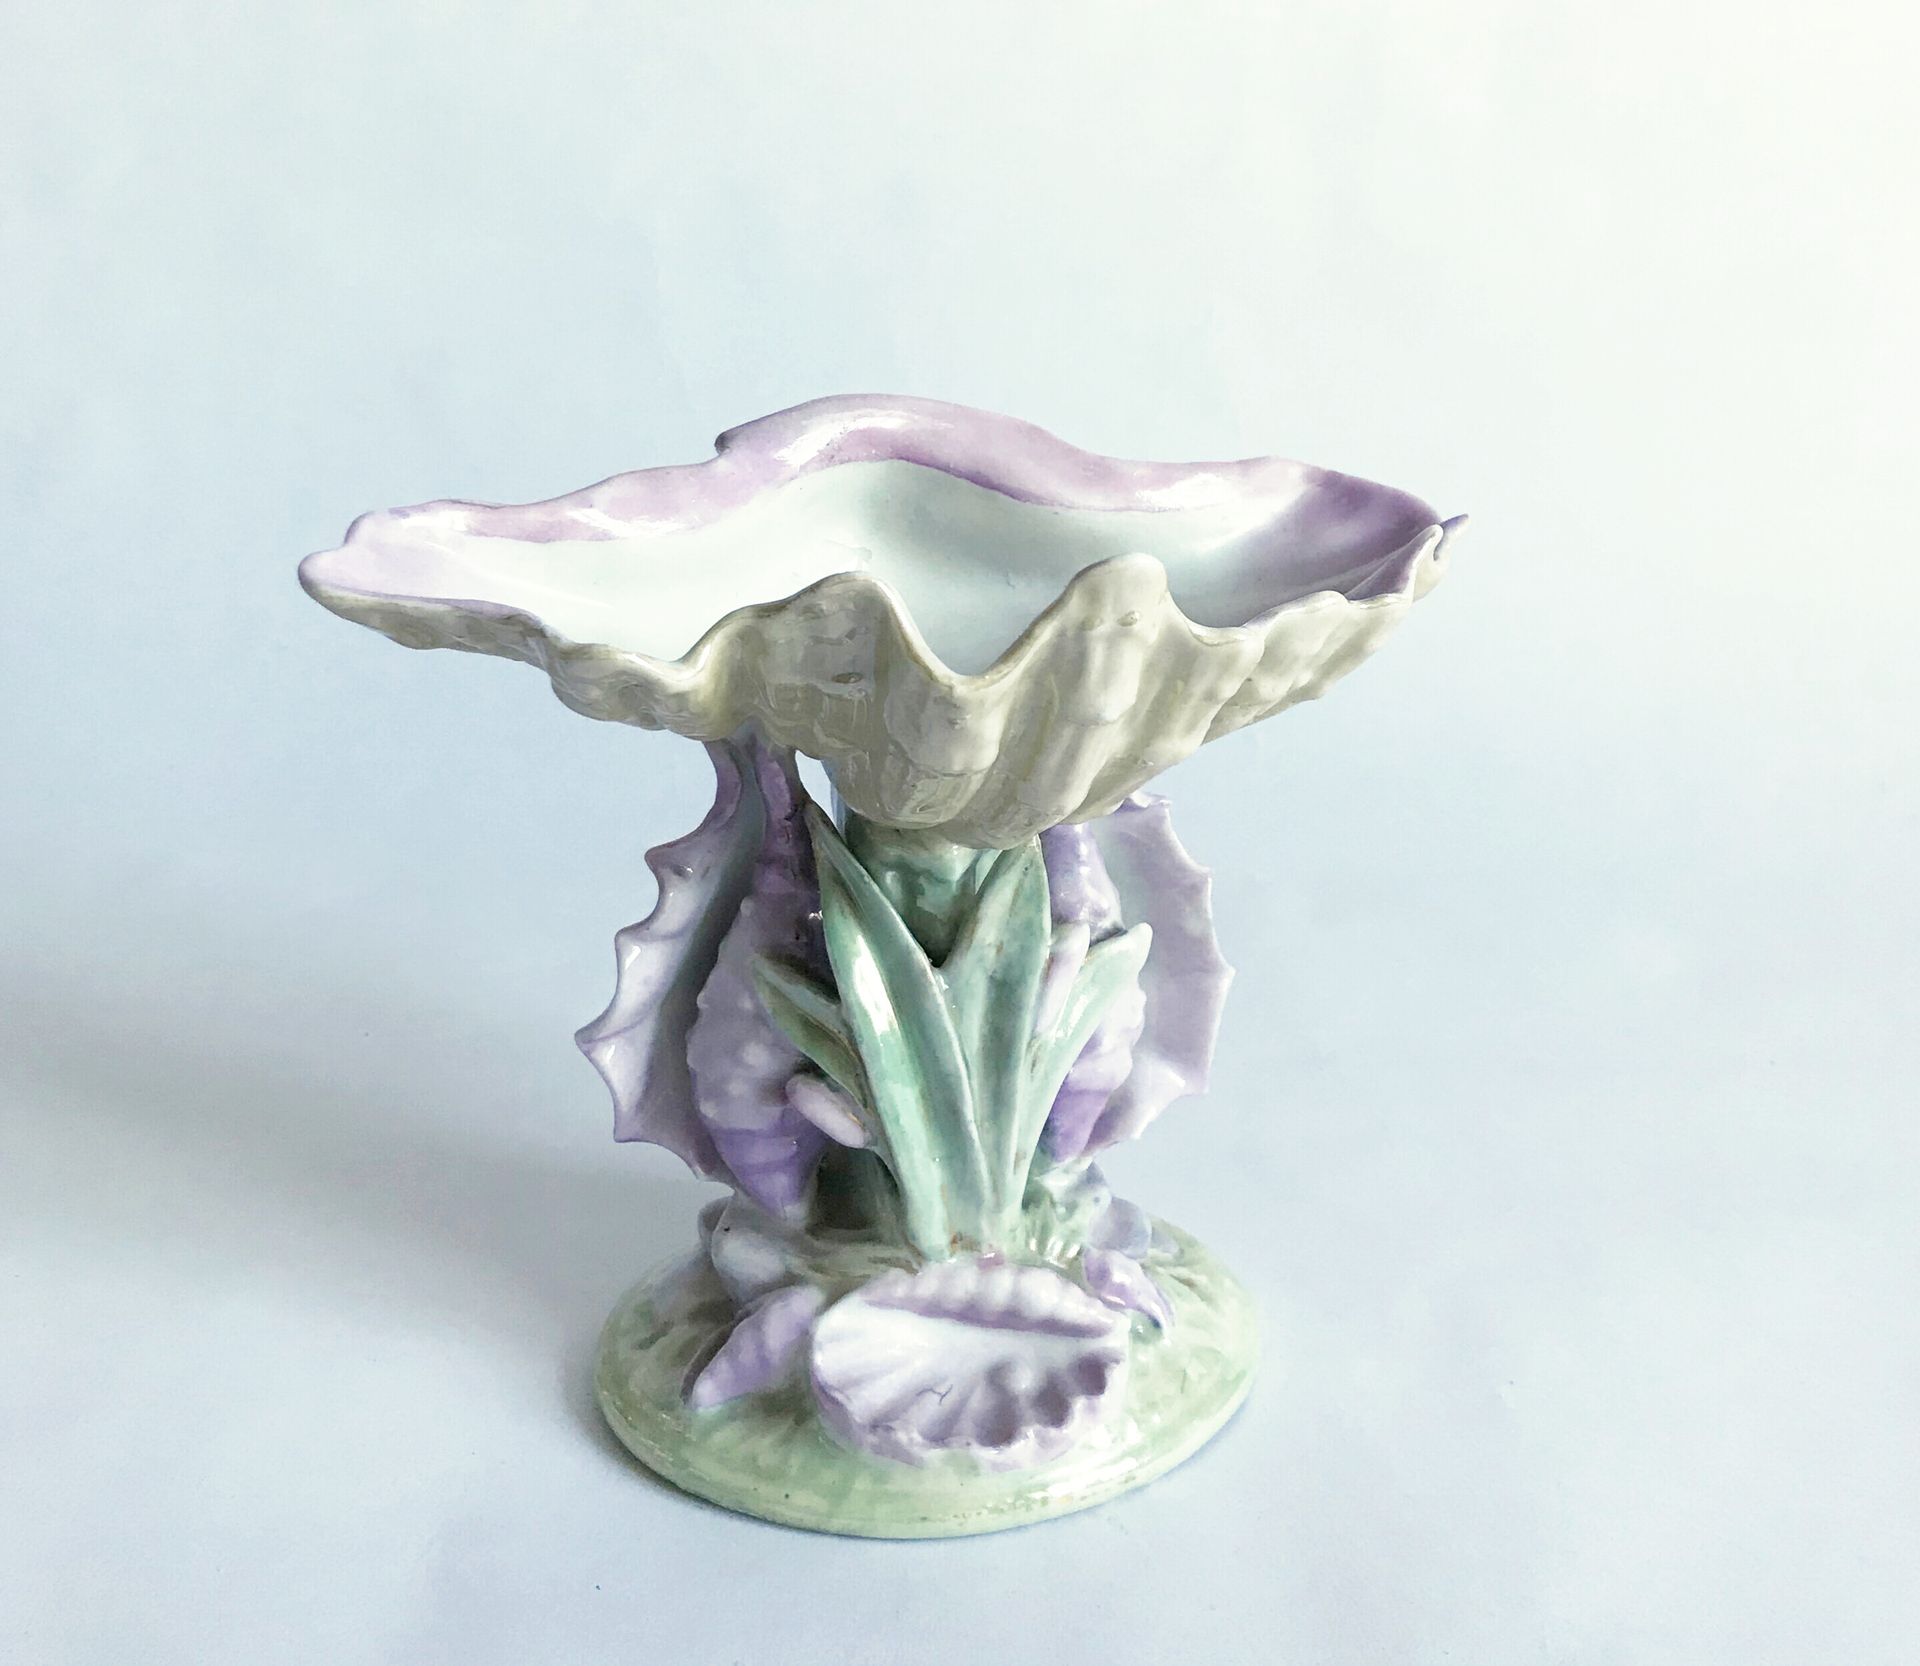 Null 瓷碗用滑石装饰，形状为海螺搁在贝壳和海草上。约1950年

H.16厘米